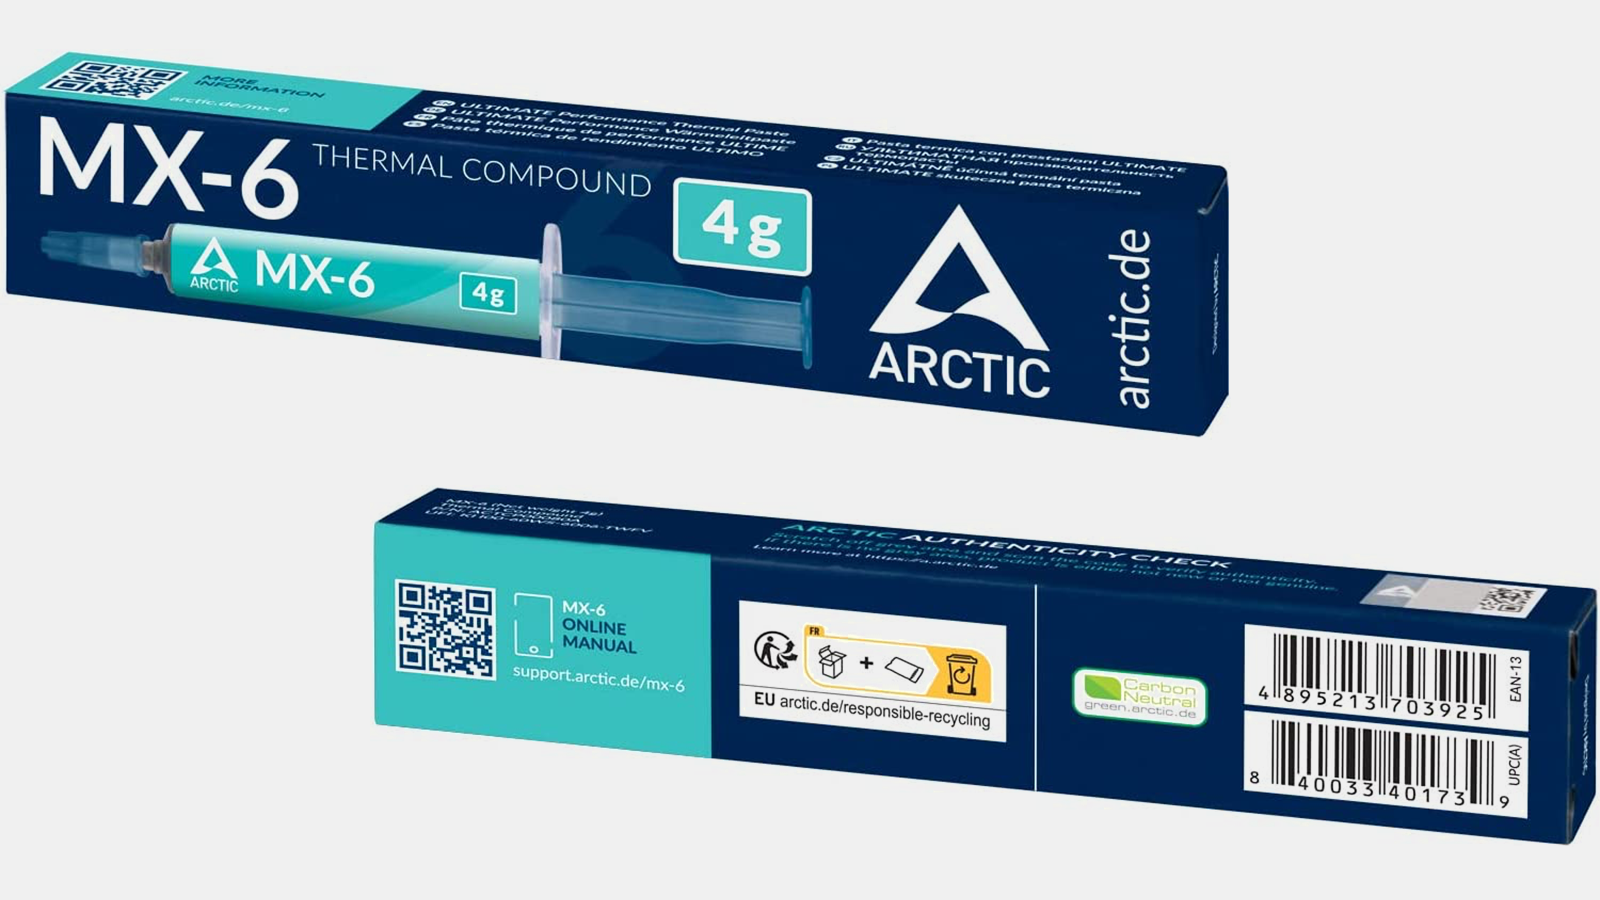 Arctic MX-4 vs MX-5 vs MX-6 Thermal Paste Review Result and general  impression